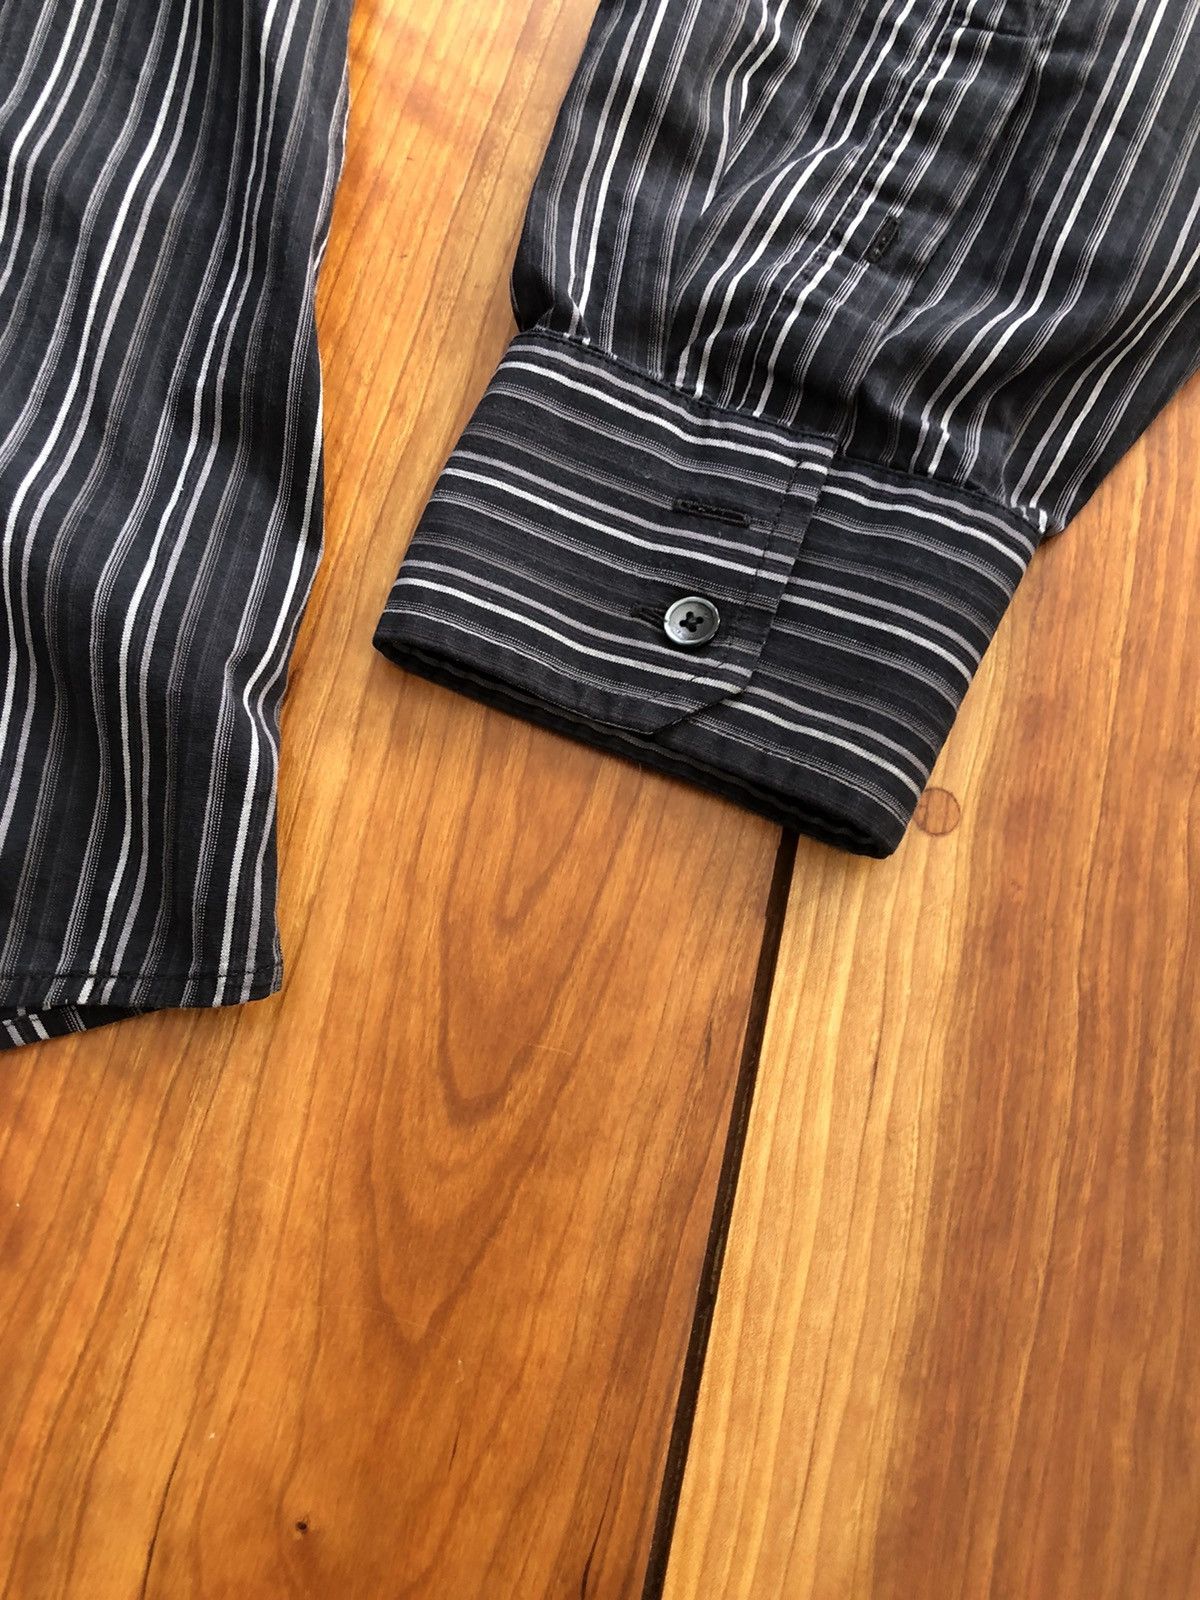 Calvin Klein Calvin Klein Black Striped Shirt Size US XL / EU 56 / 4 - 2 Preview